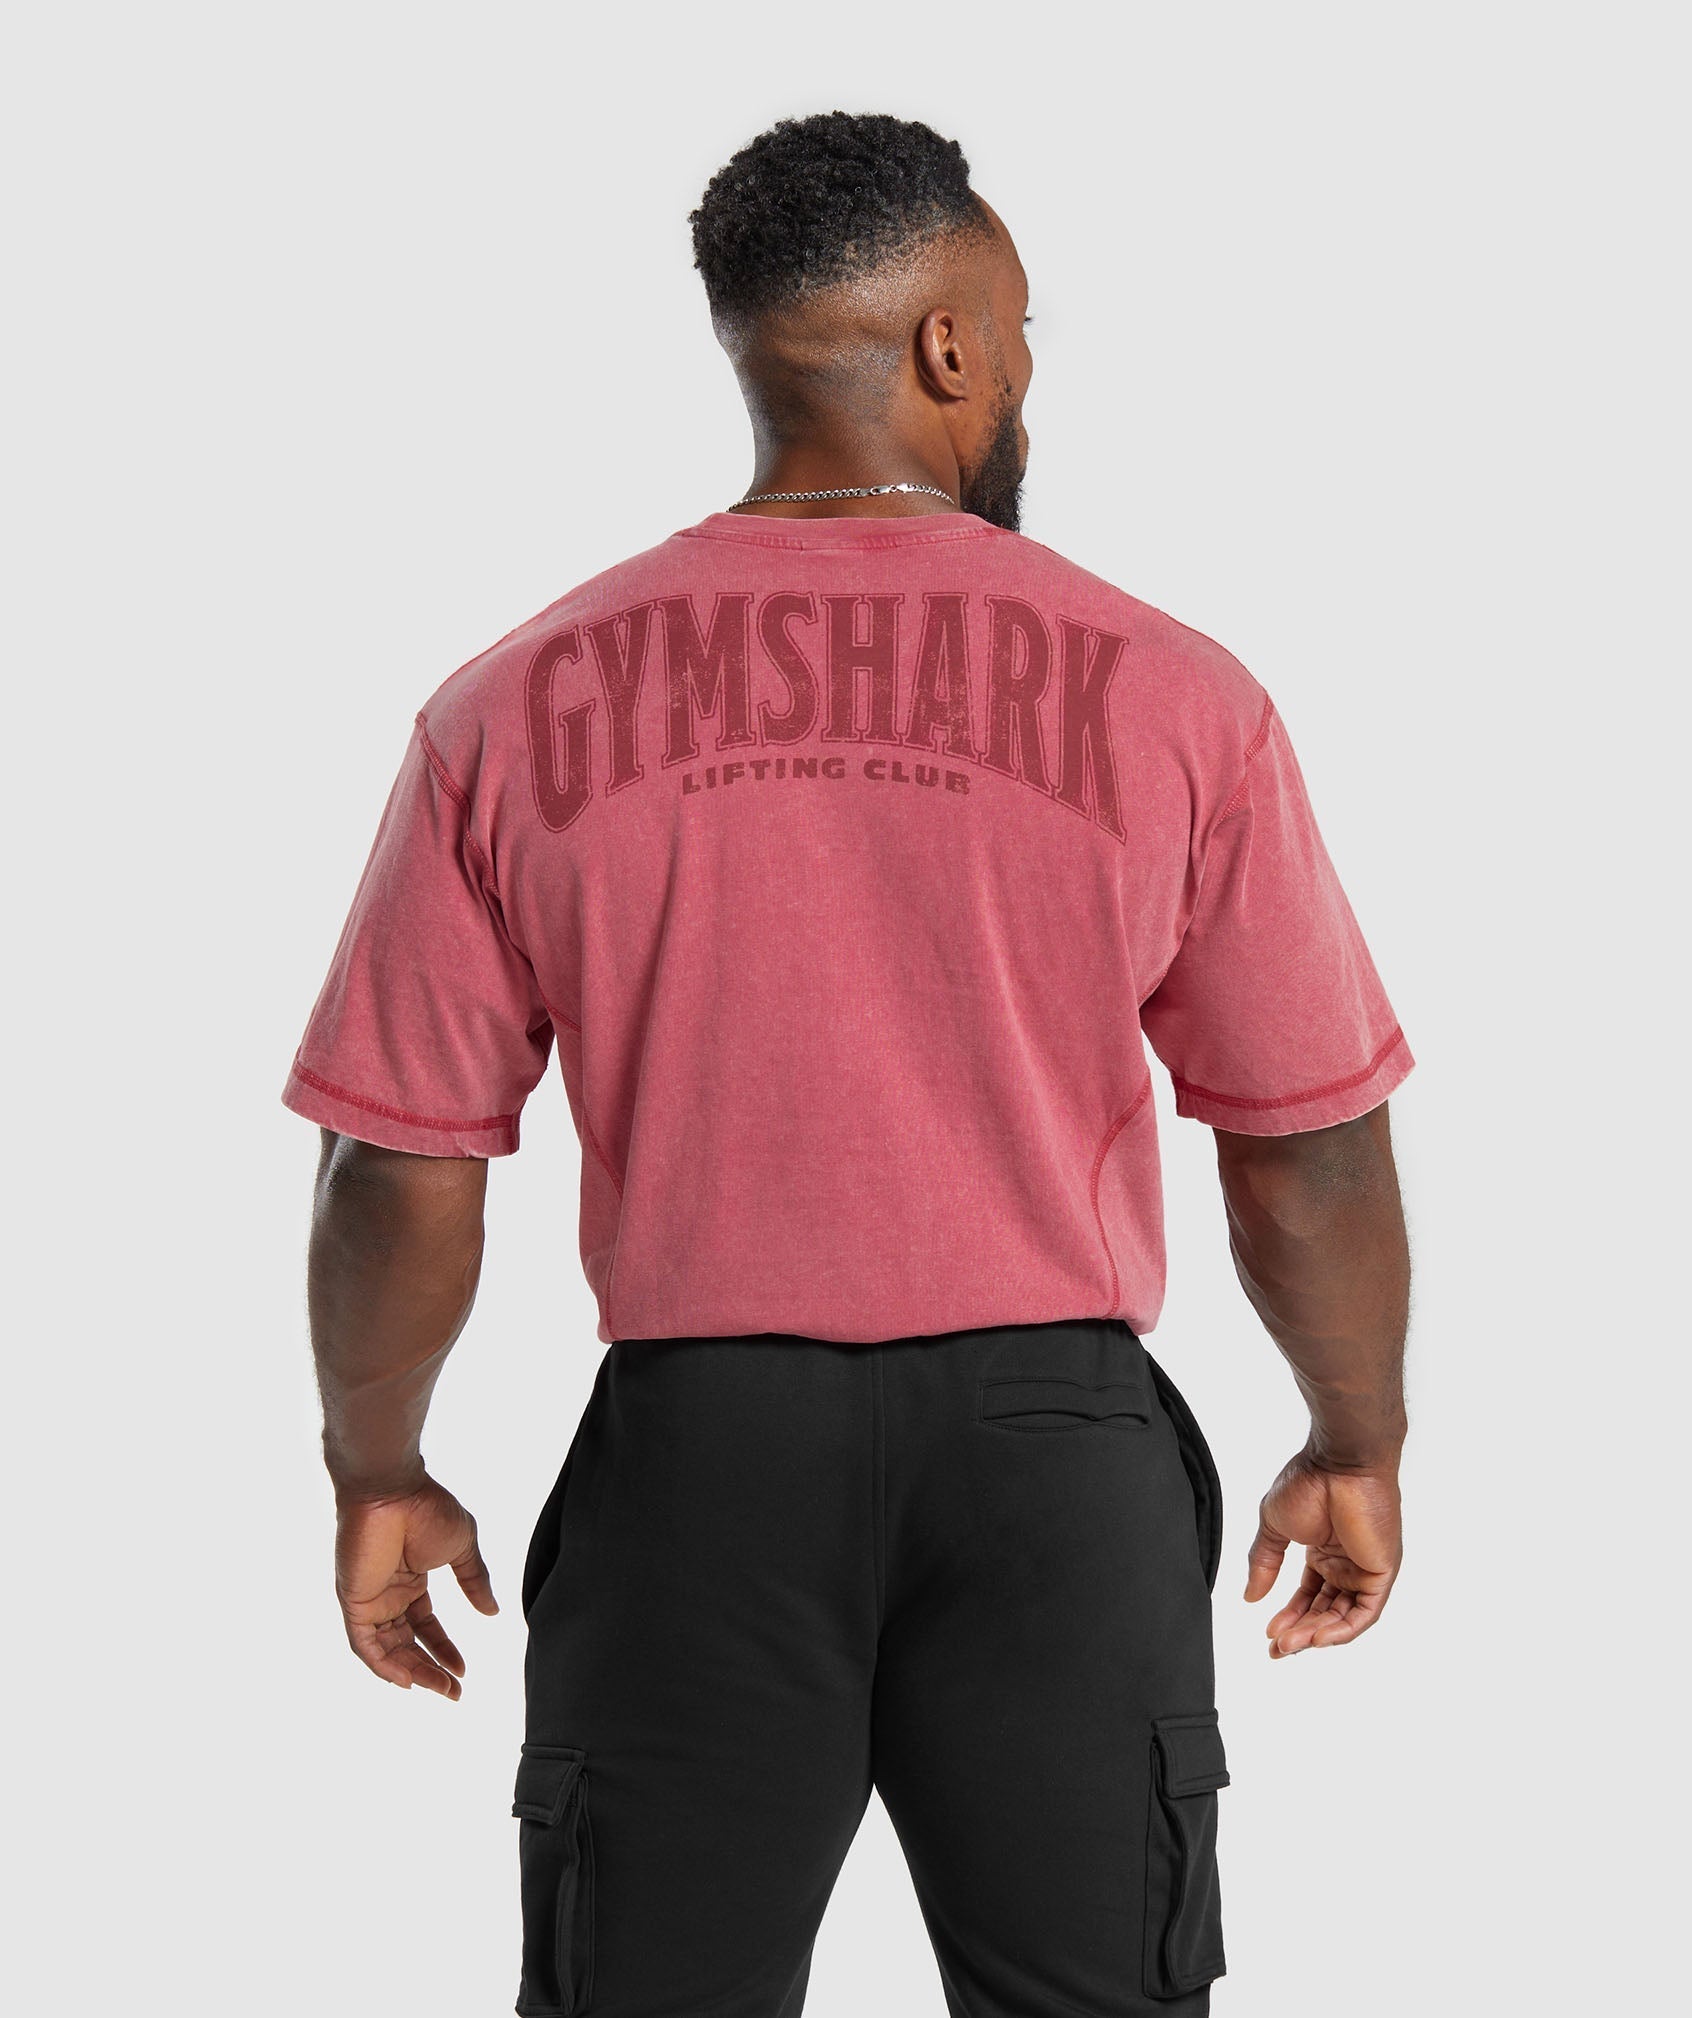 Gymshark Heritage Washed T-Shirt - Navy